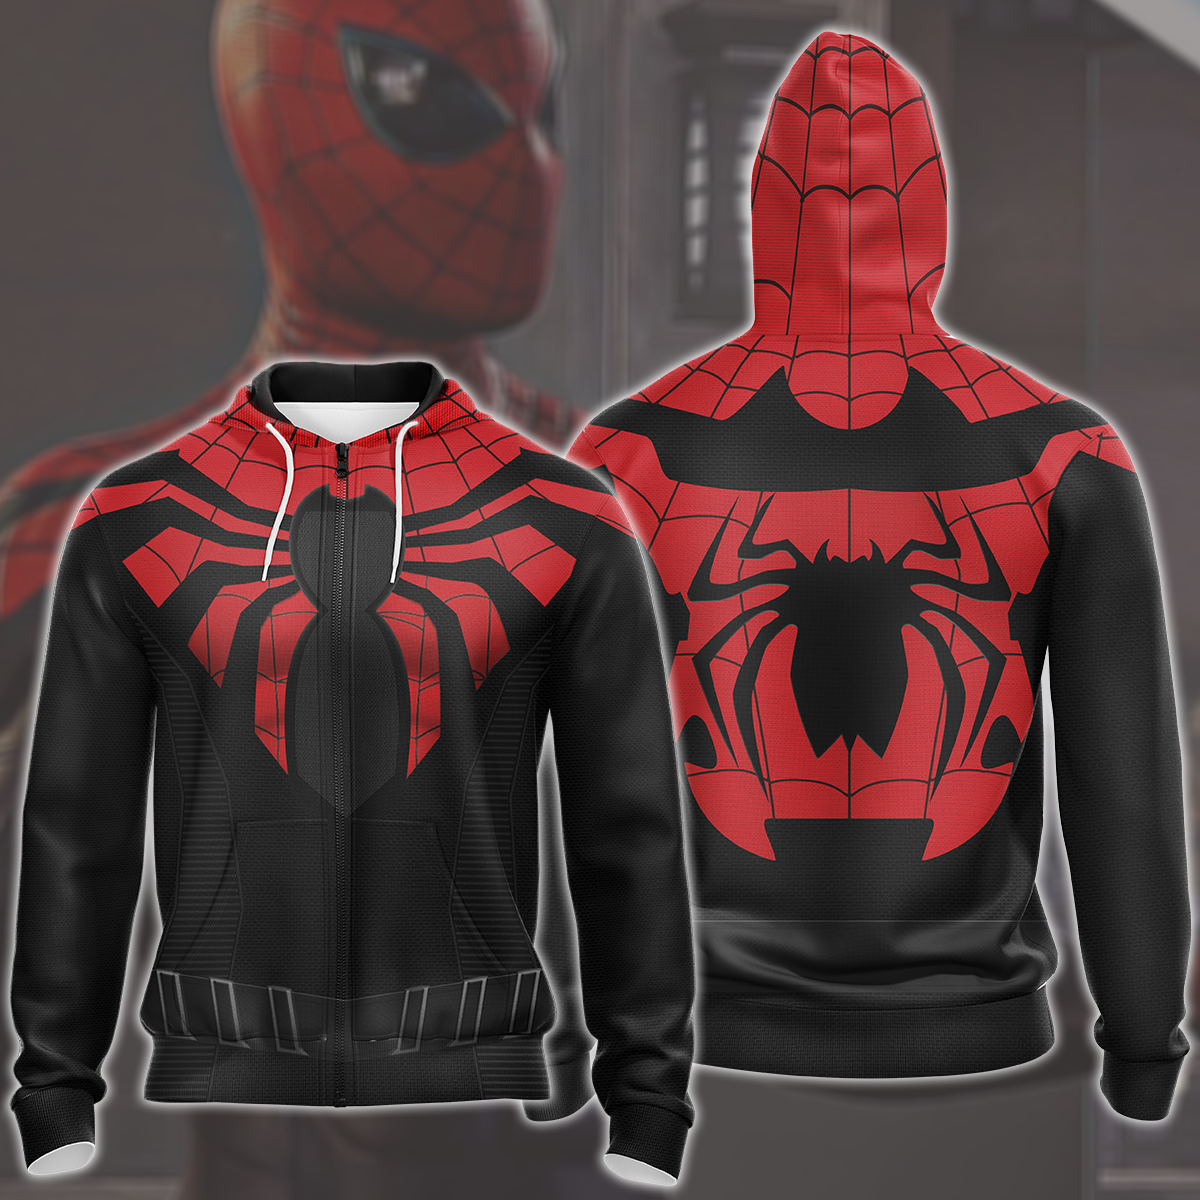 Spider-Man 2 Peter Parker Superior Suit Cosplay Video Game All Over Printed T-shirt Tank Top Zip Hoodie Pullover Hoodie Hawaiian Shirt Beach Shorts Joggers 01 Zip Hoodie S